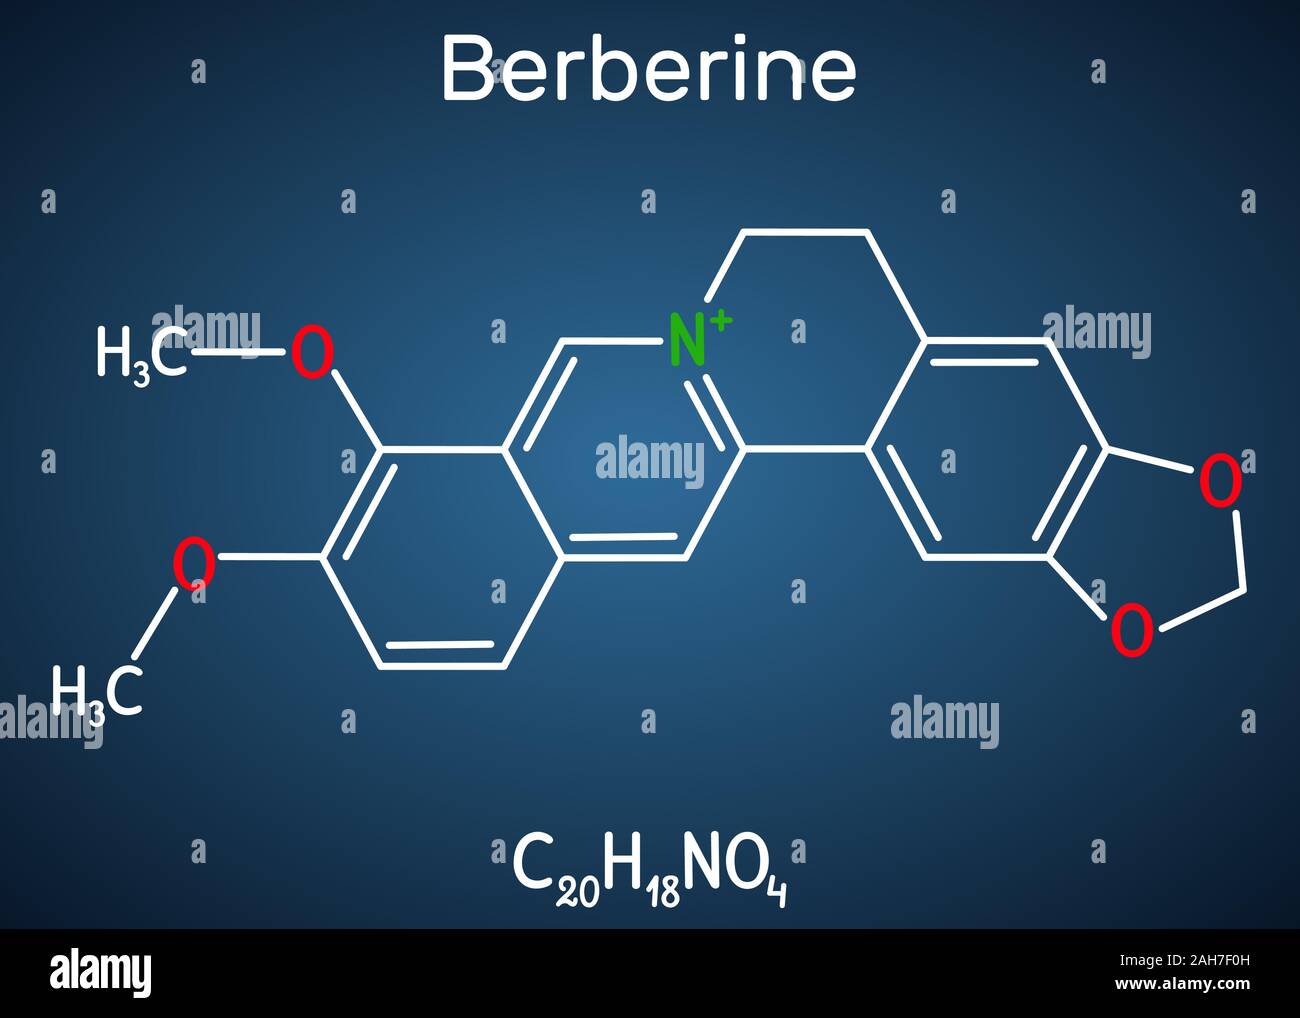 Berberine C20H18NO4, herbal alkaloid molecule. Structural chemical formula on the dark blue background. Vector illustration Stock Vector